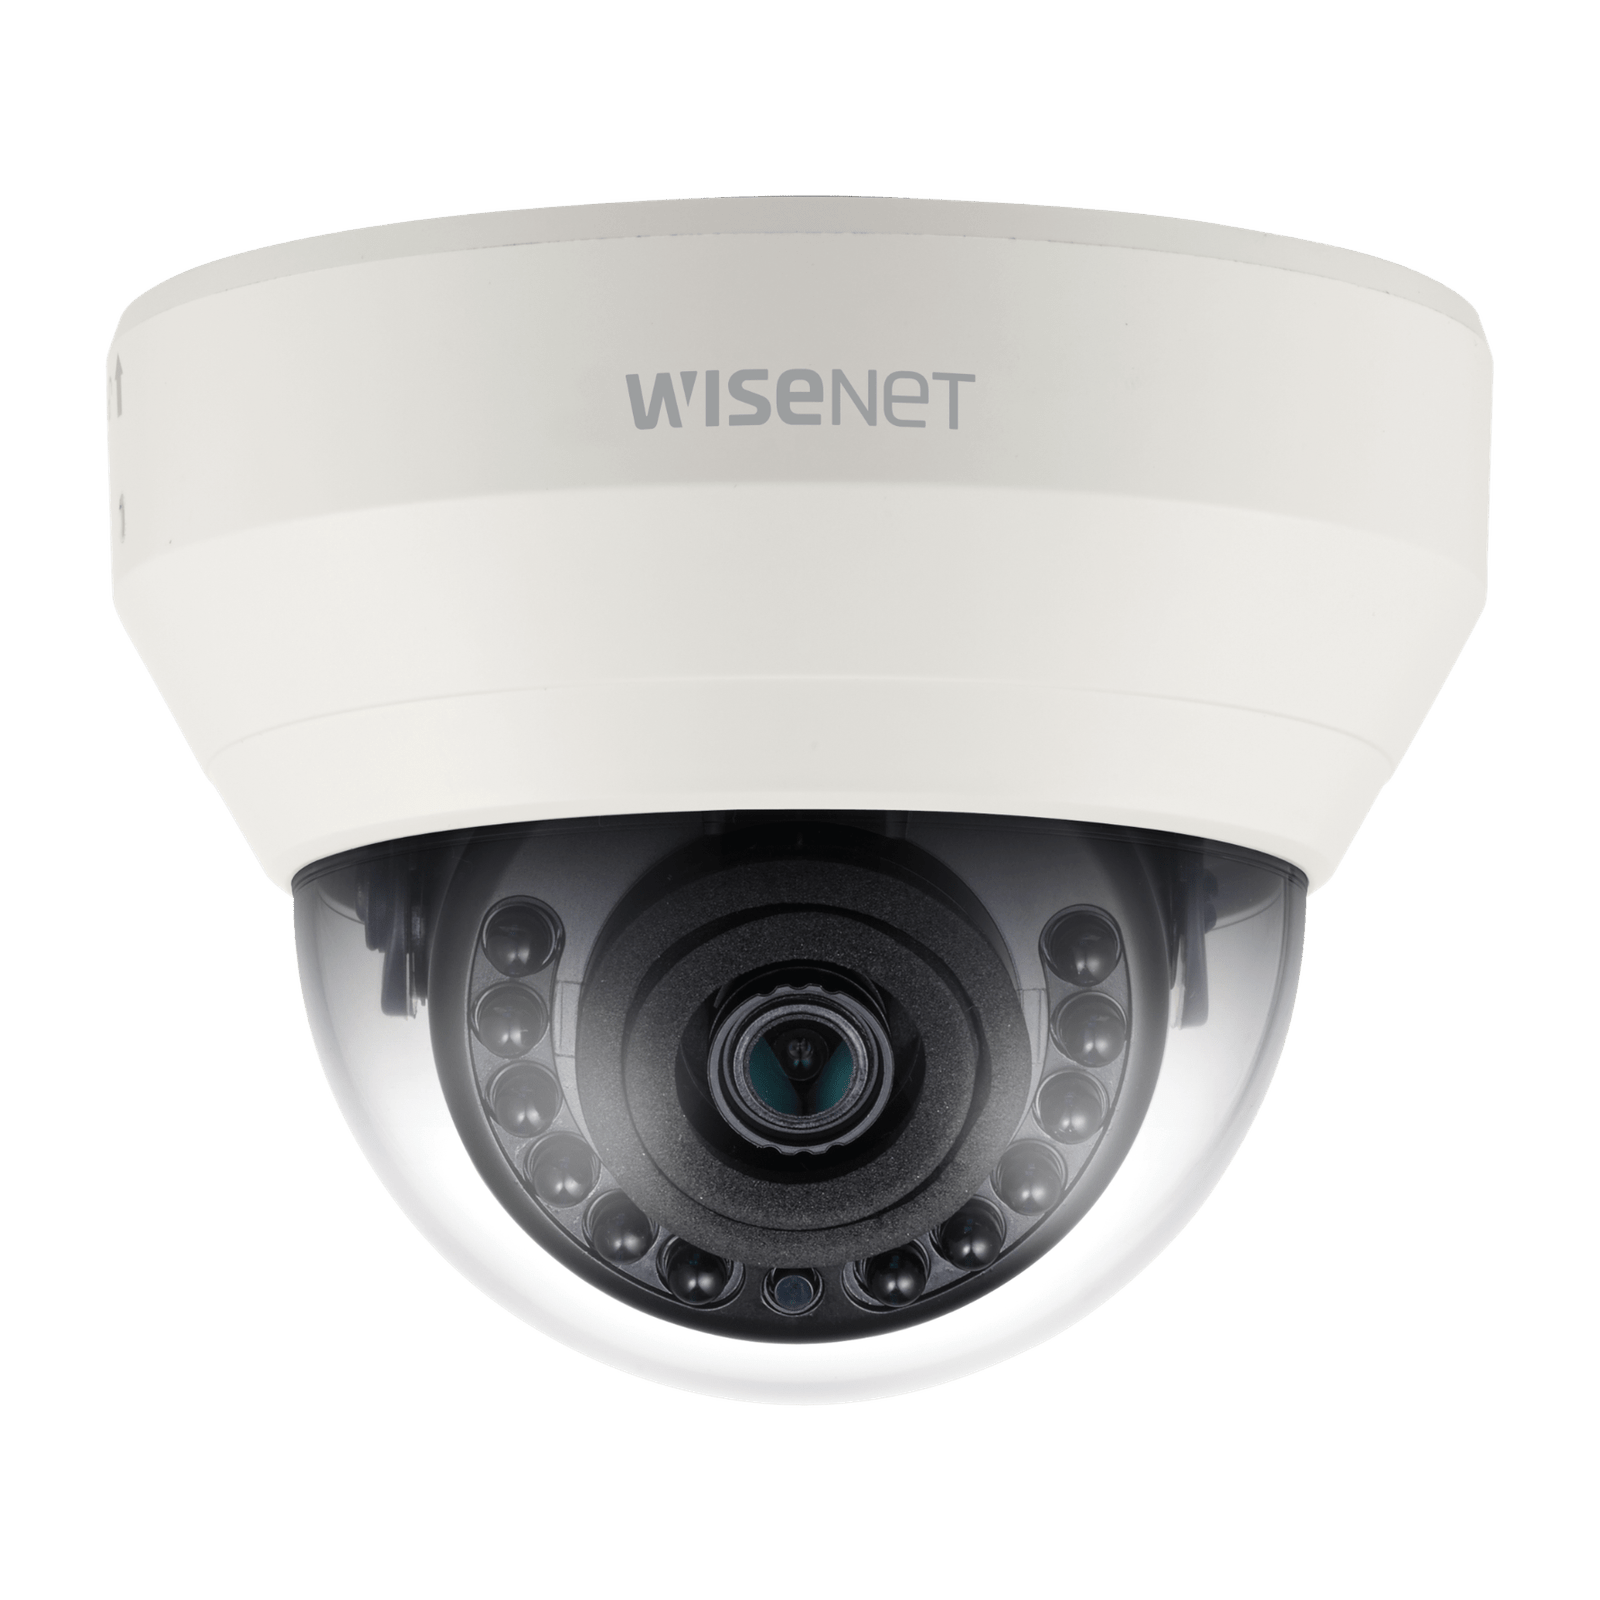 HCD-6020R Dome Security Camera